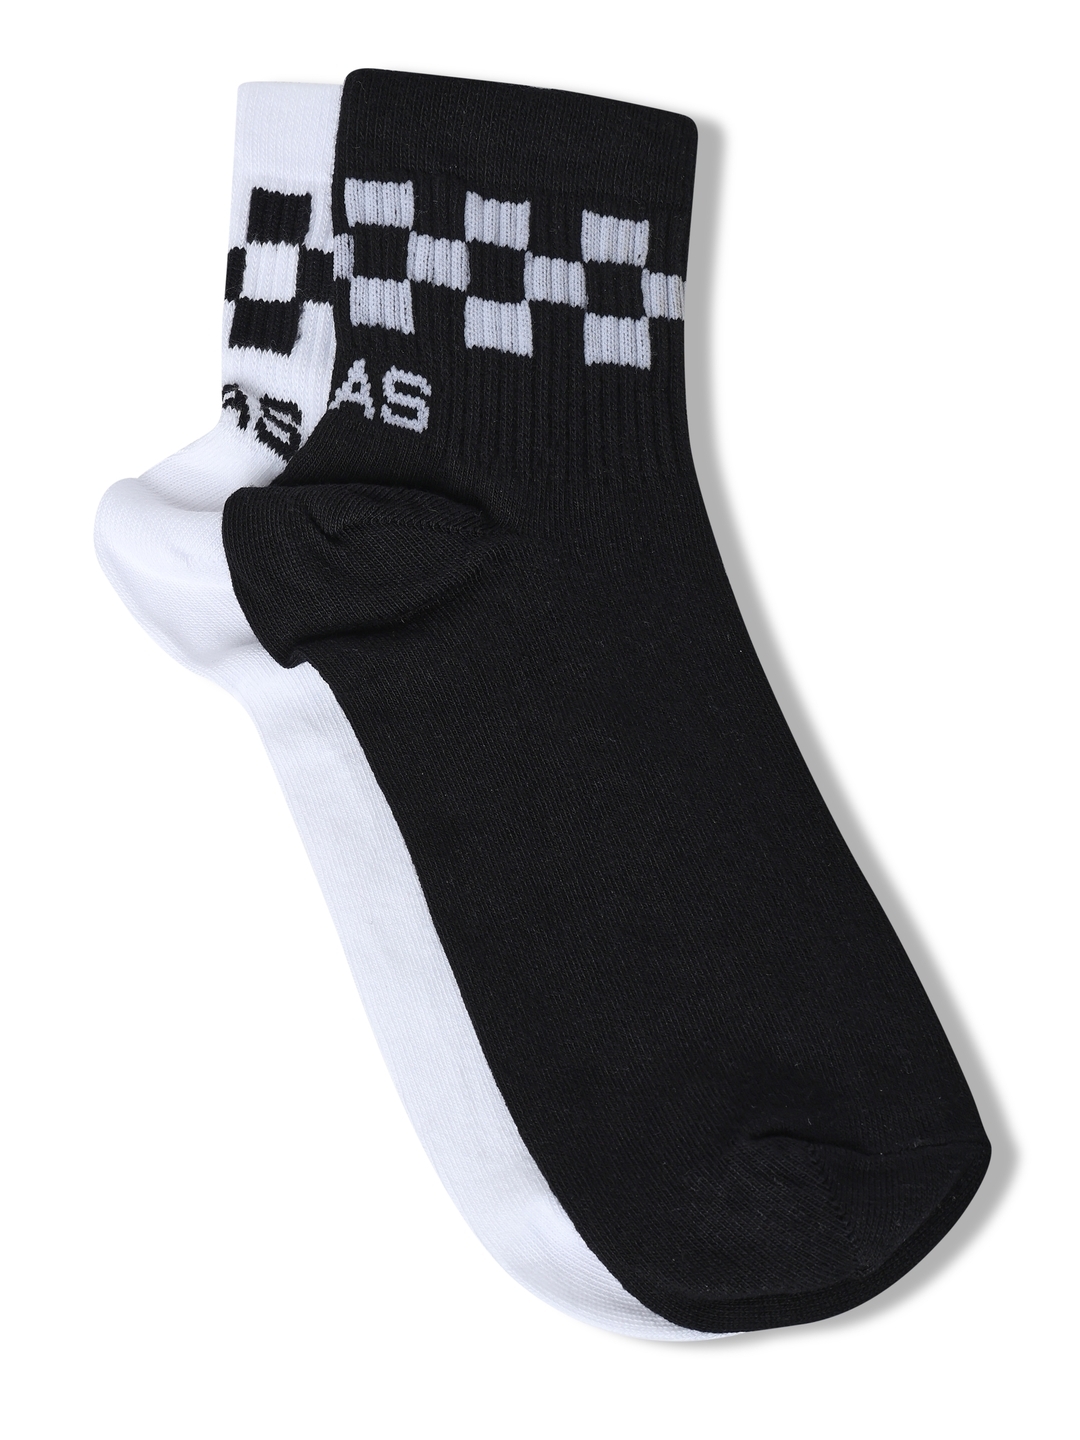 RETO IN Black & White Check Socks (Pack of 2)